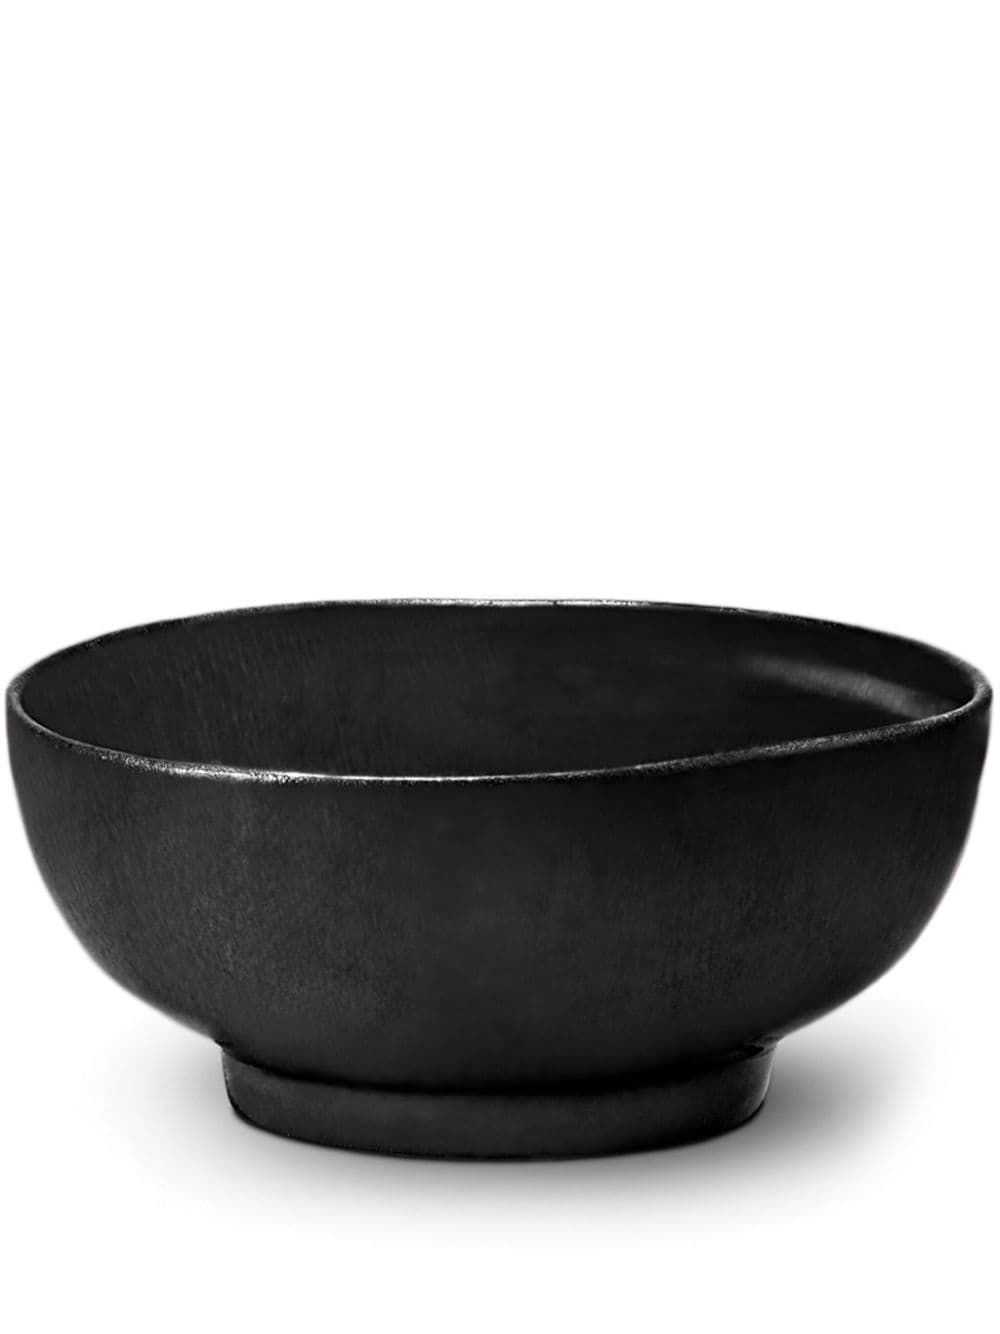 L'Objet Terra porcelain sauce bowl (9cm) - Black von L'Objet